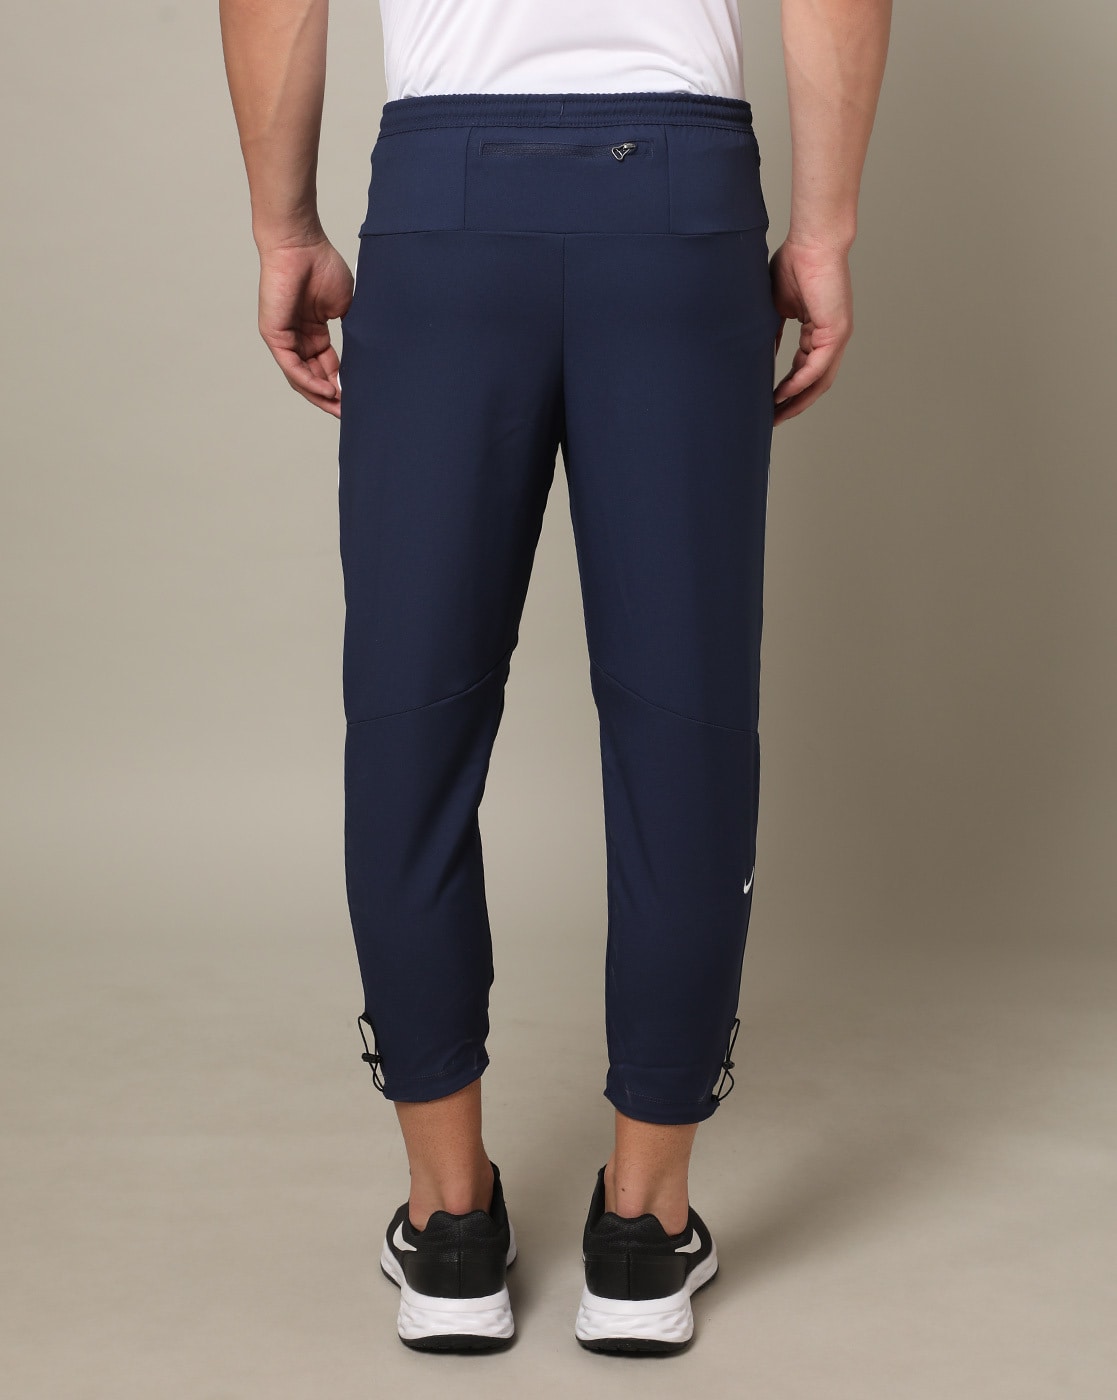 Nike Mens Track Pants Blue Ankle Zippers Side Pockets Drawstring